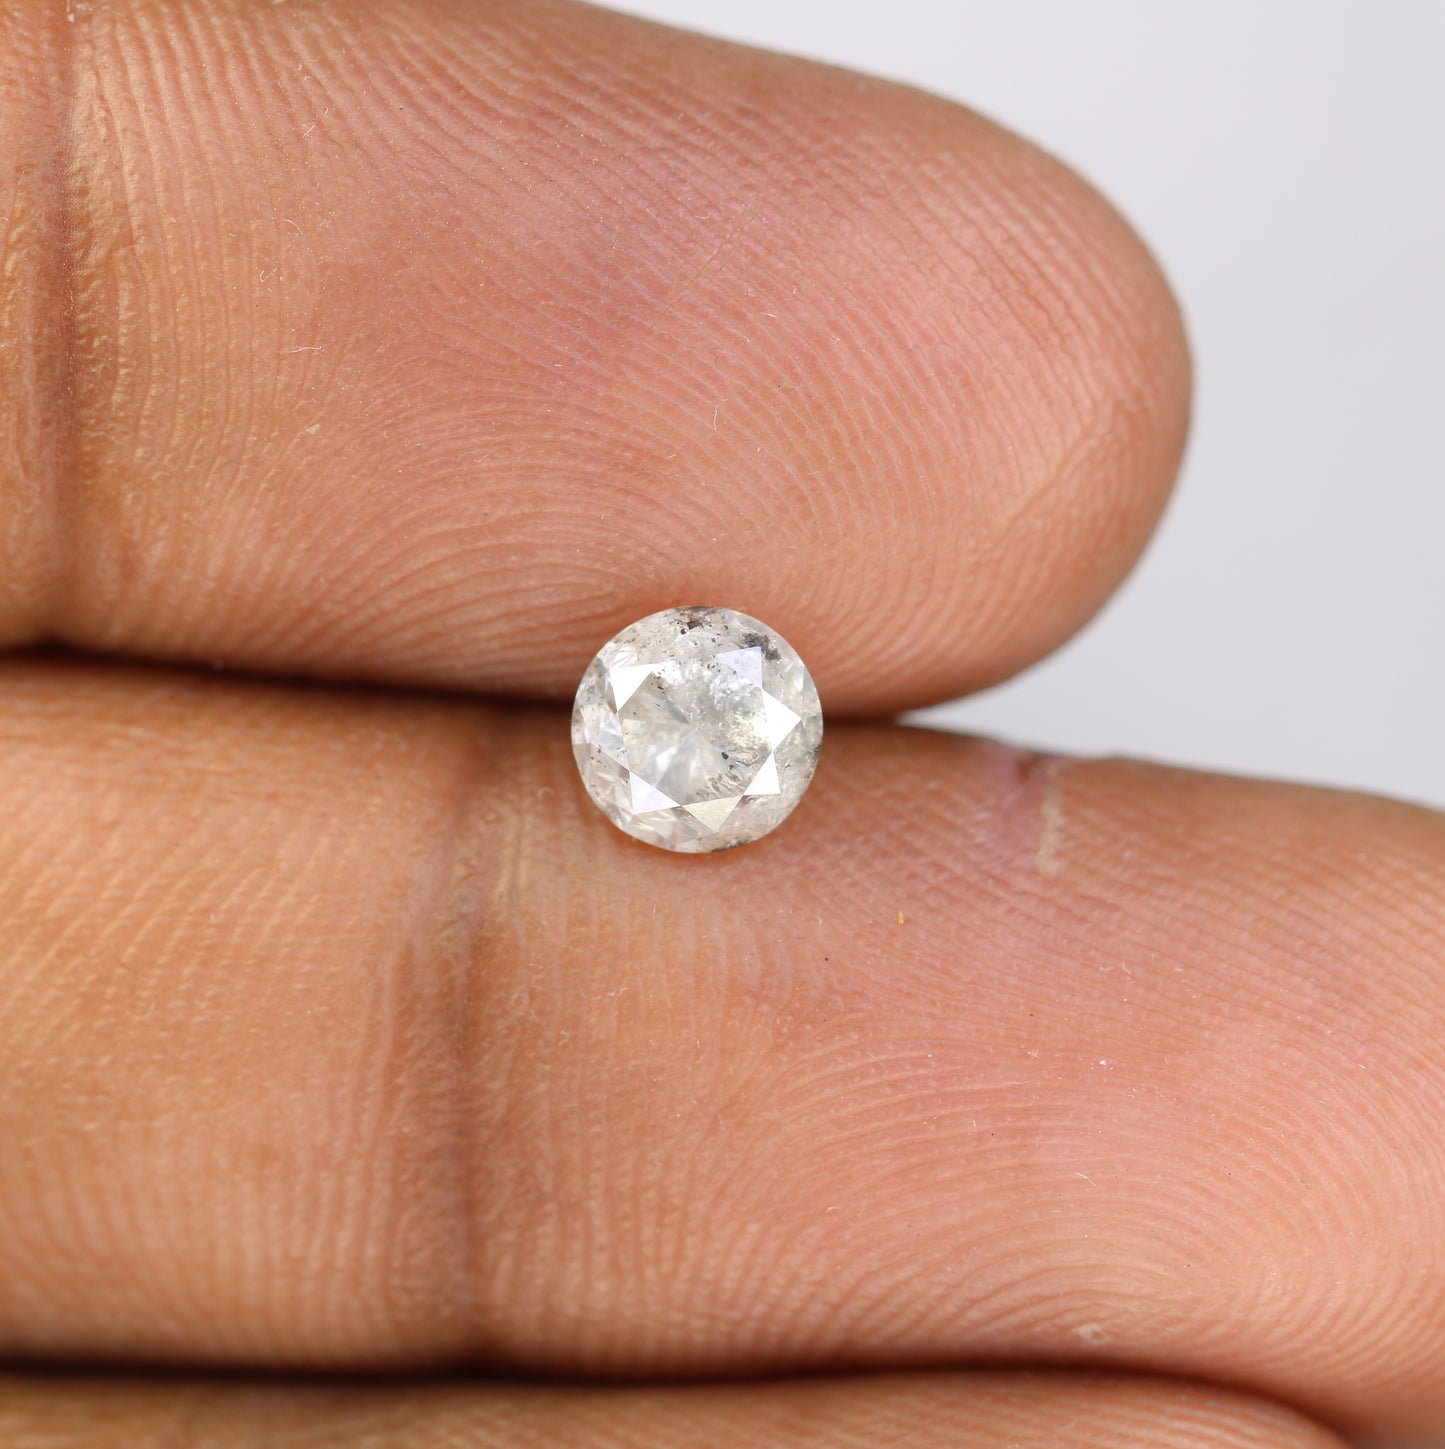 0.98 CT Salt And Pepper Loose Round Brilliant Cut Diamond Ring